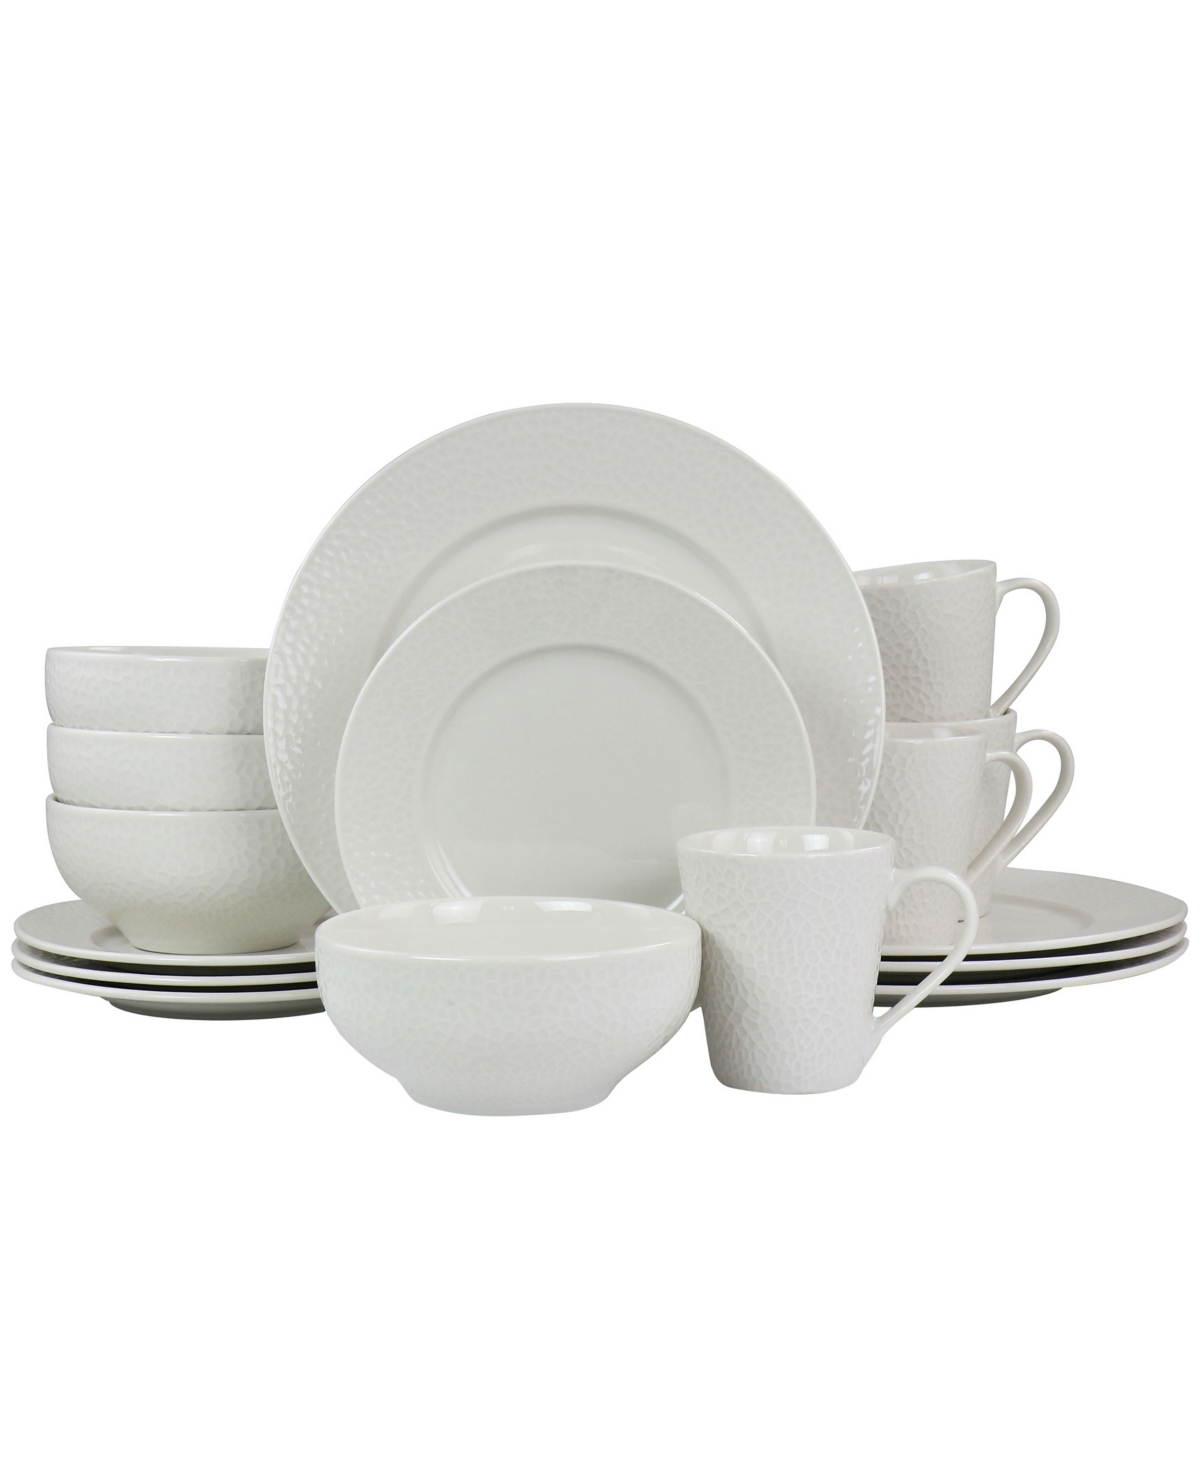 Alexa 16 Piece Porcelain Dinnerware Set, Service for 4 - White